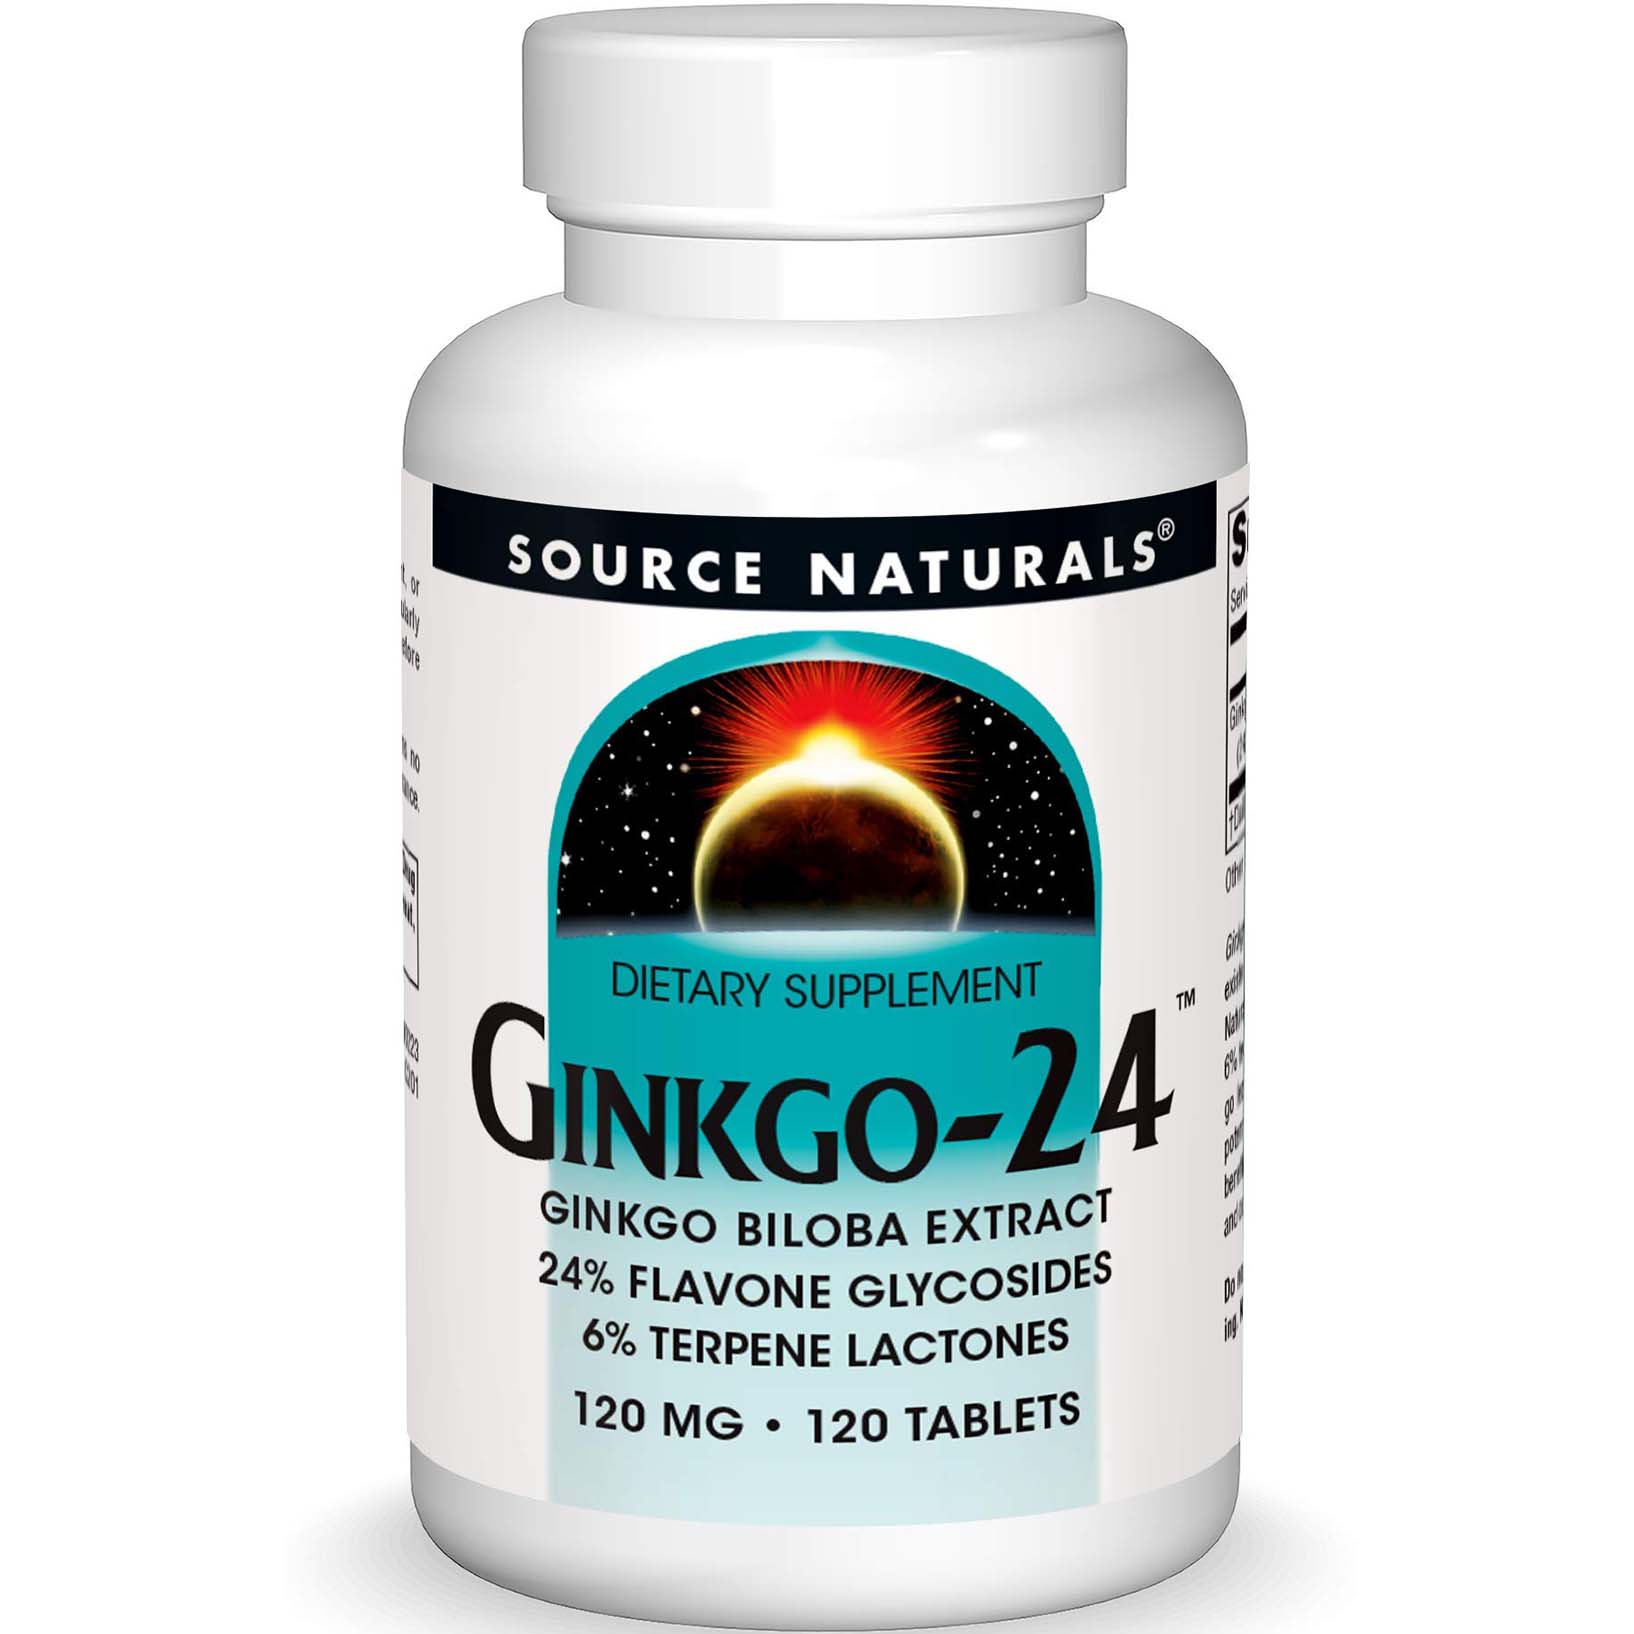 Source Naturals Ginkgo 24 Biloba 120 Tablets 120 mg